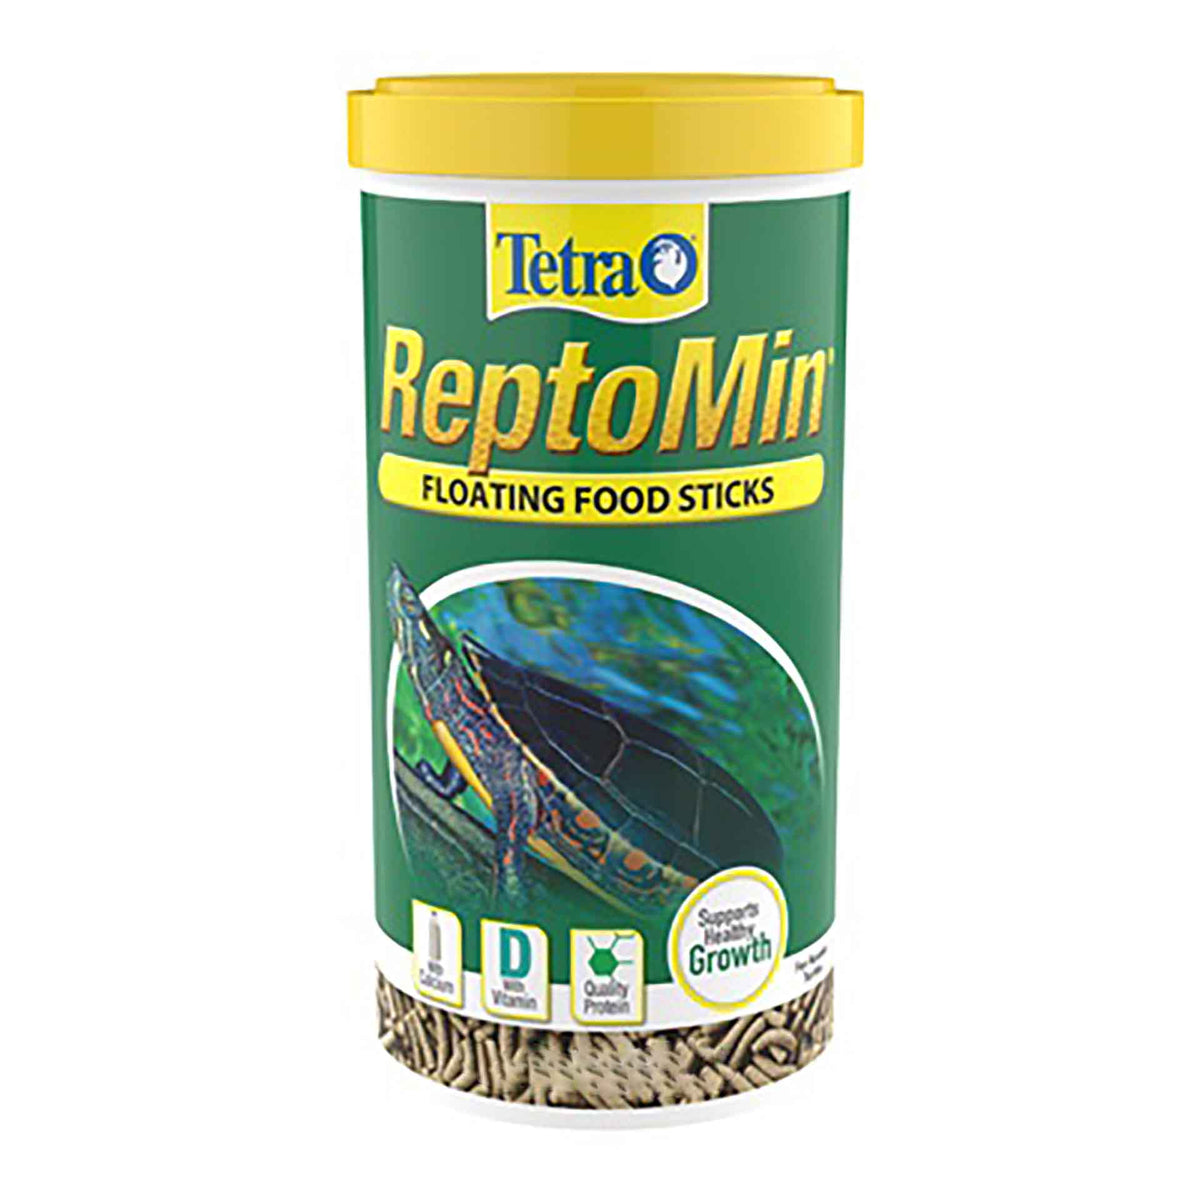 Tetra ReptoMin - 130g Turtle Food Sticks